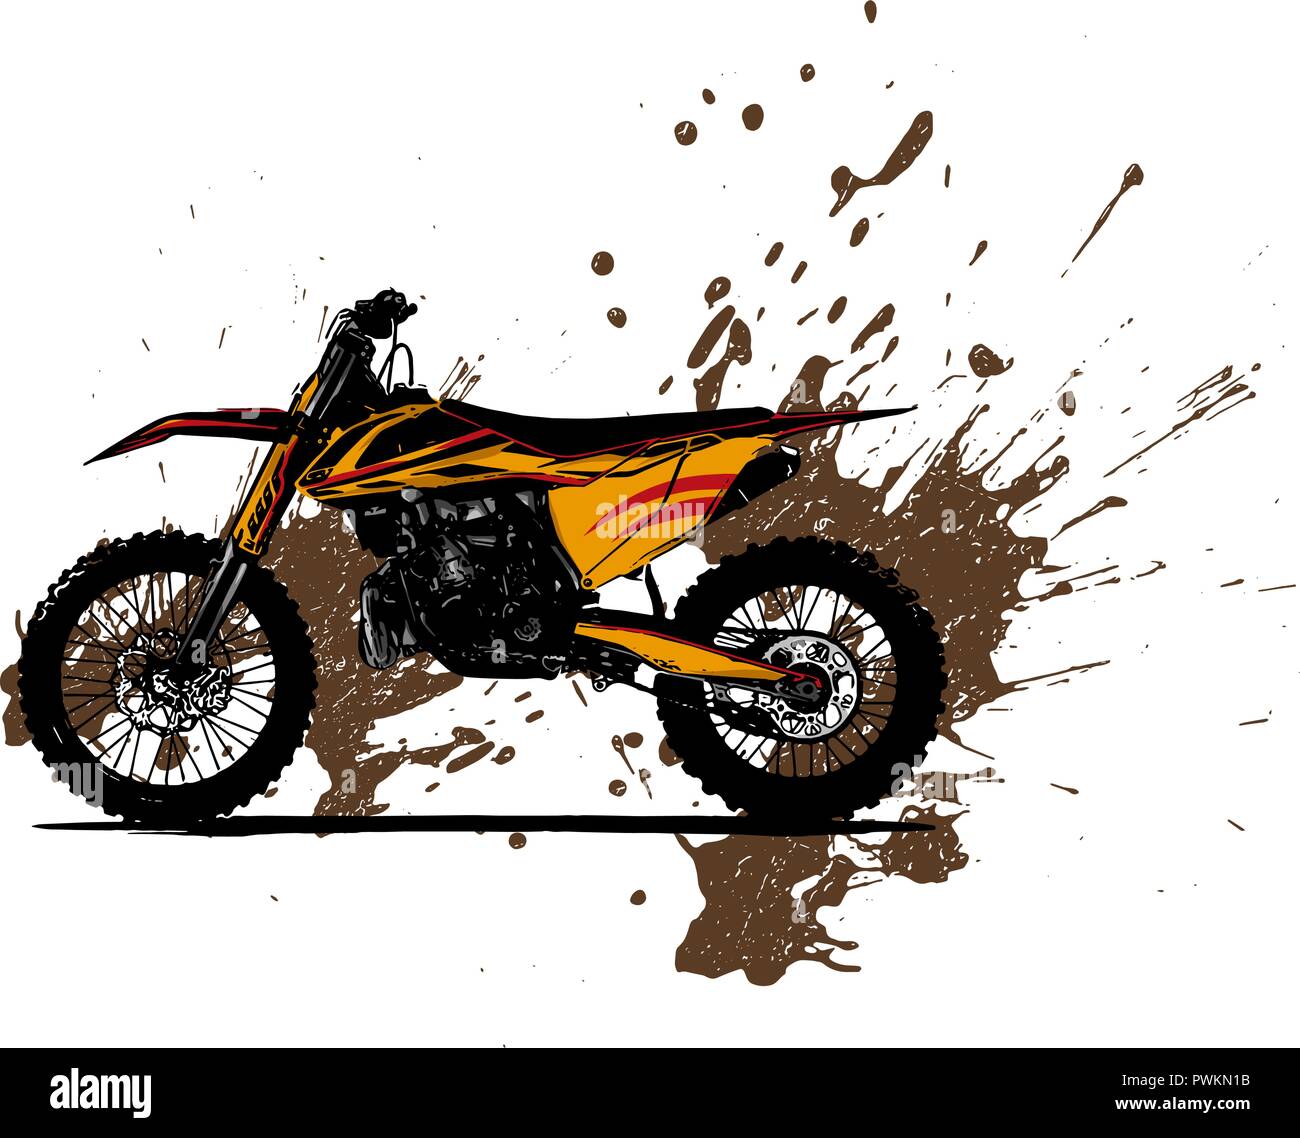 Motocross illustration rider ride le motocross bike Illustration de Vecteur